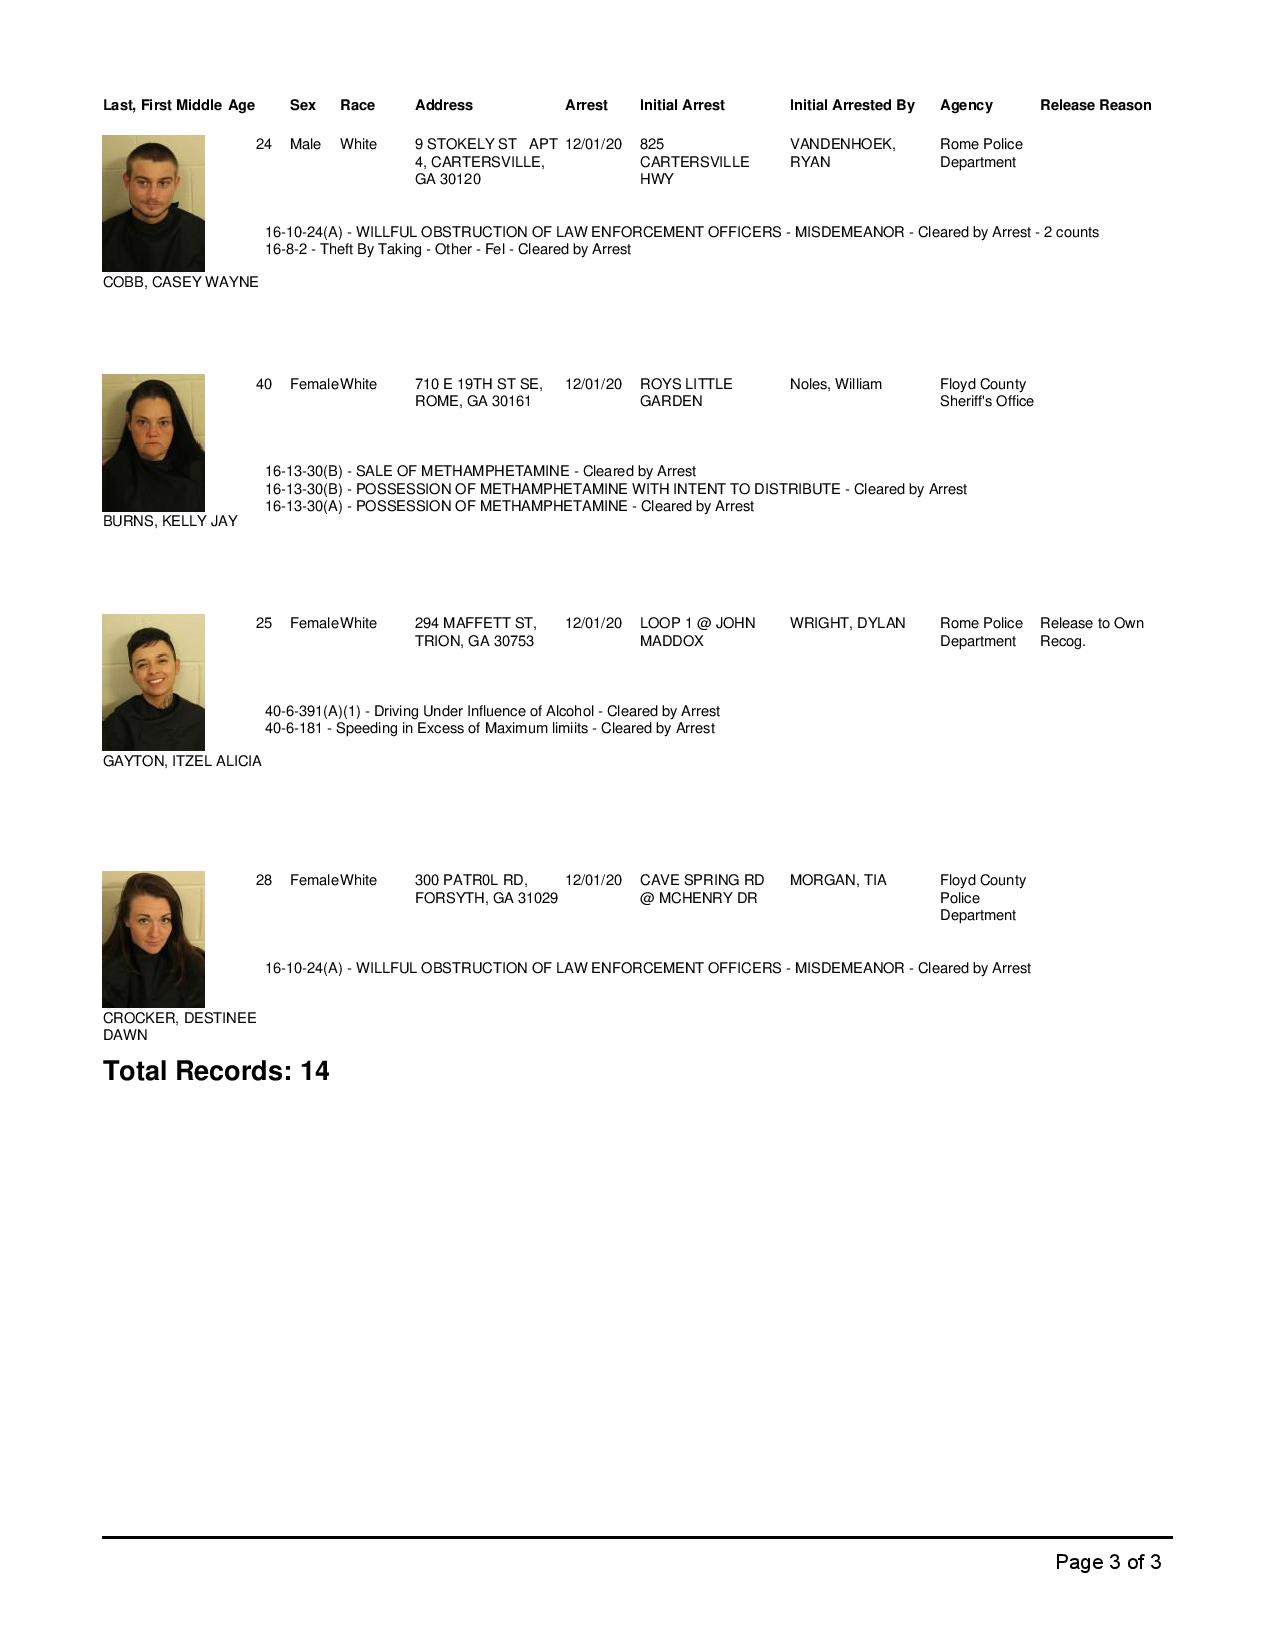 floyd jail_2020-12-02_04.00.24-page-003